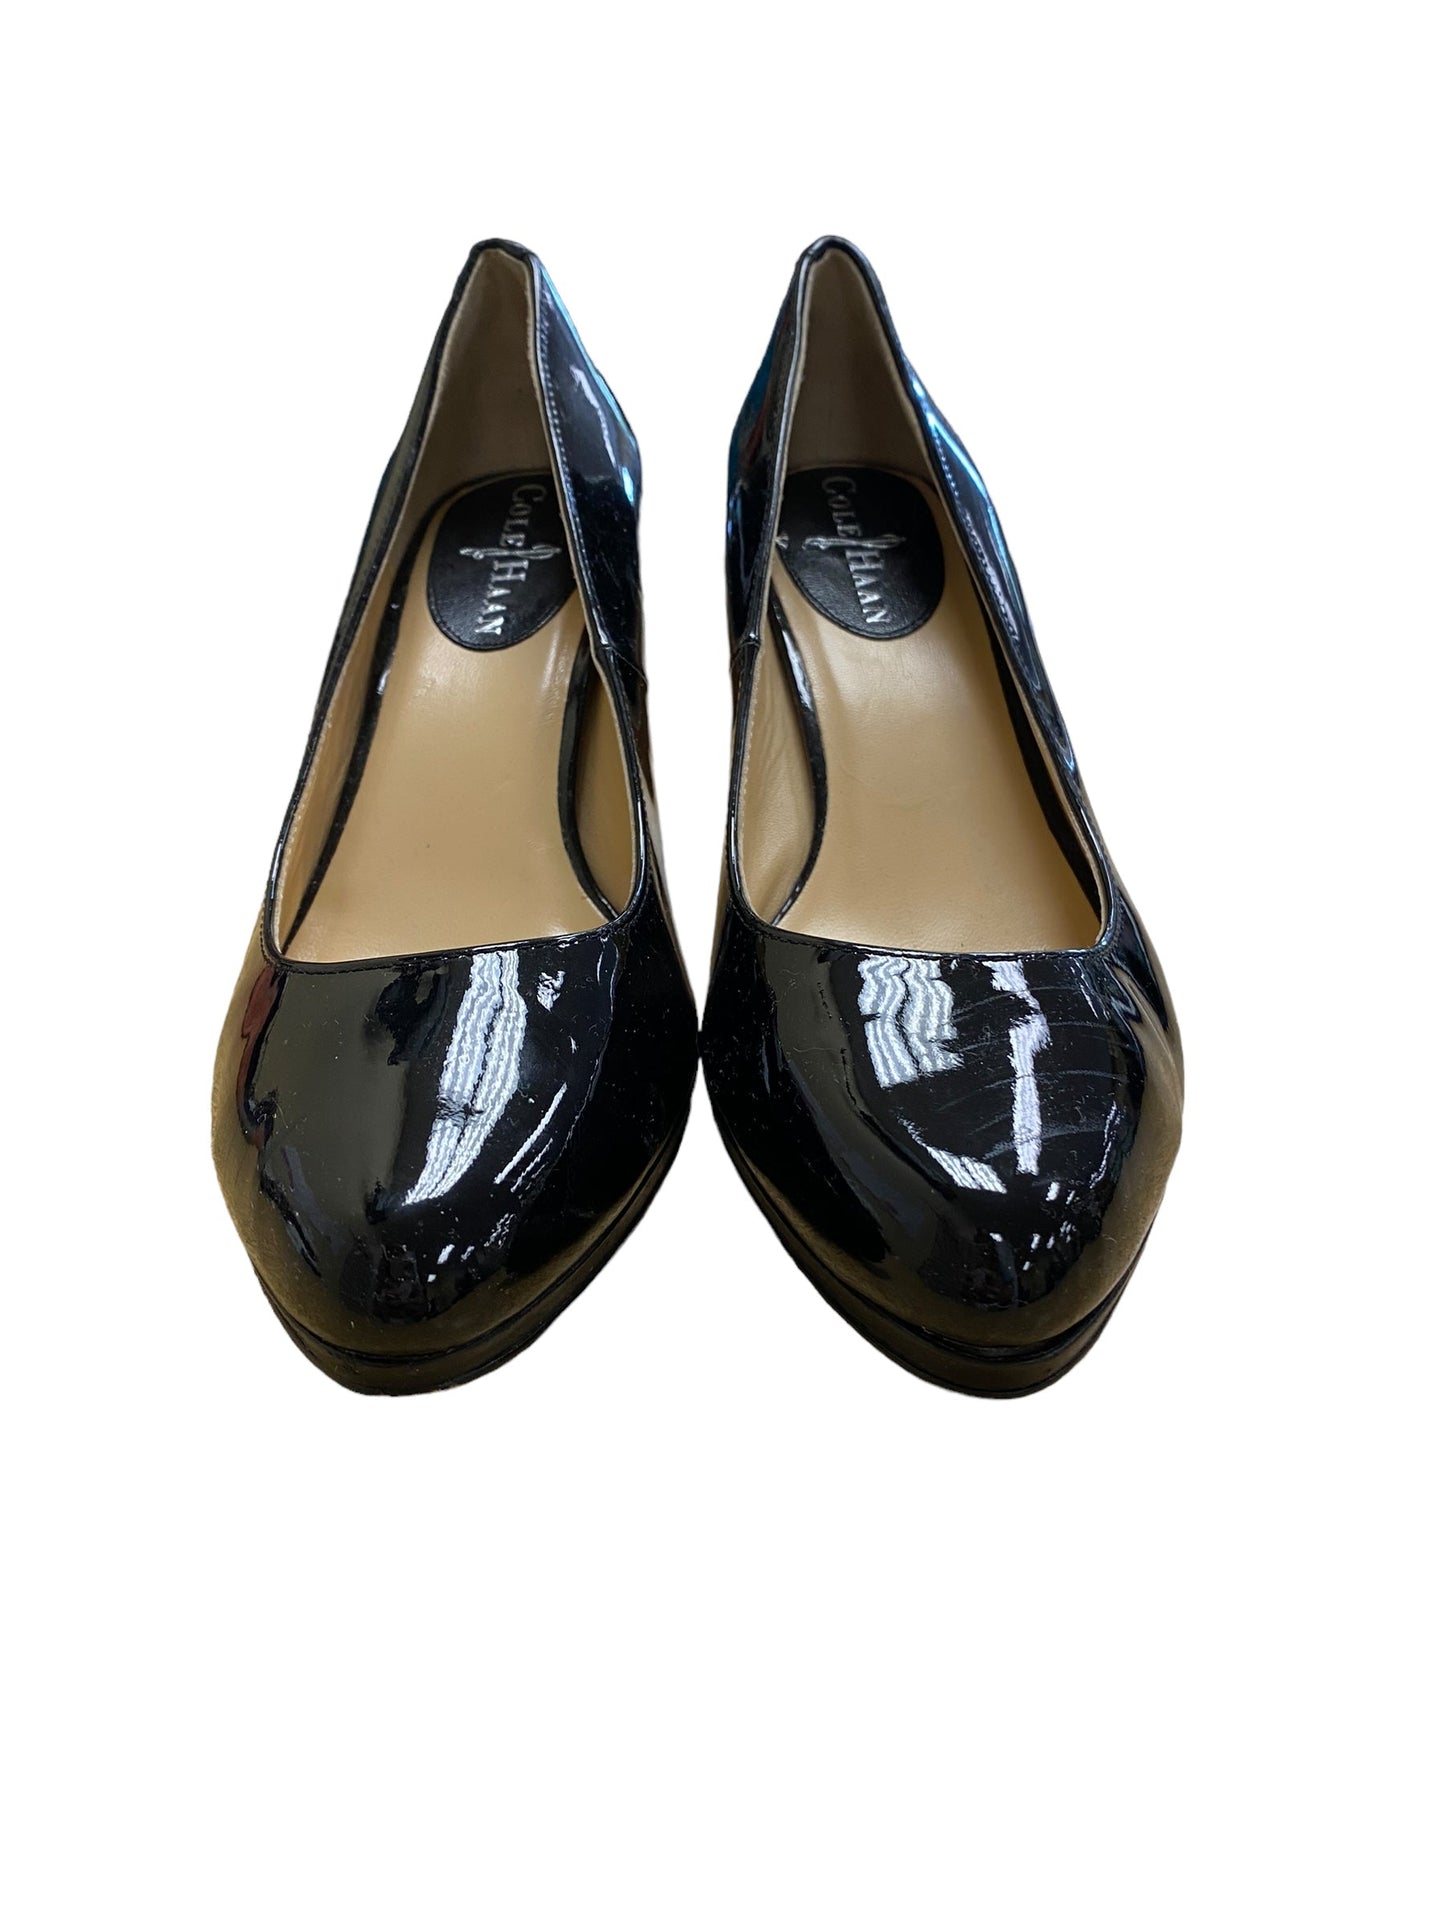 Black Shoes Heels Stiletto Cole-haan, Size 6